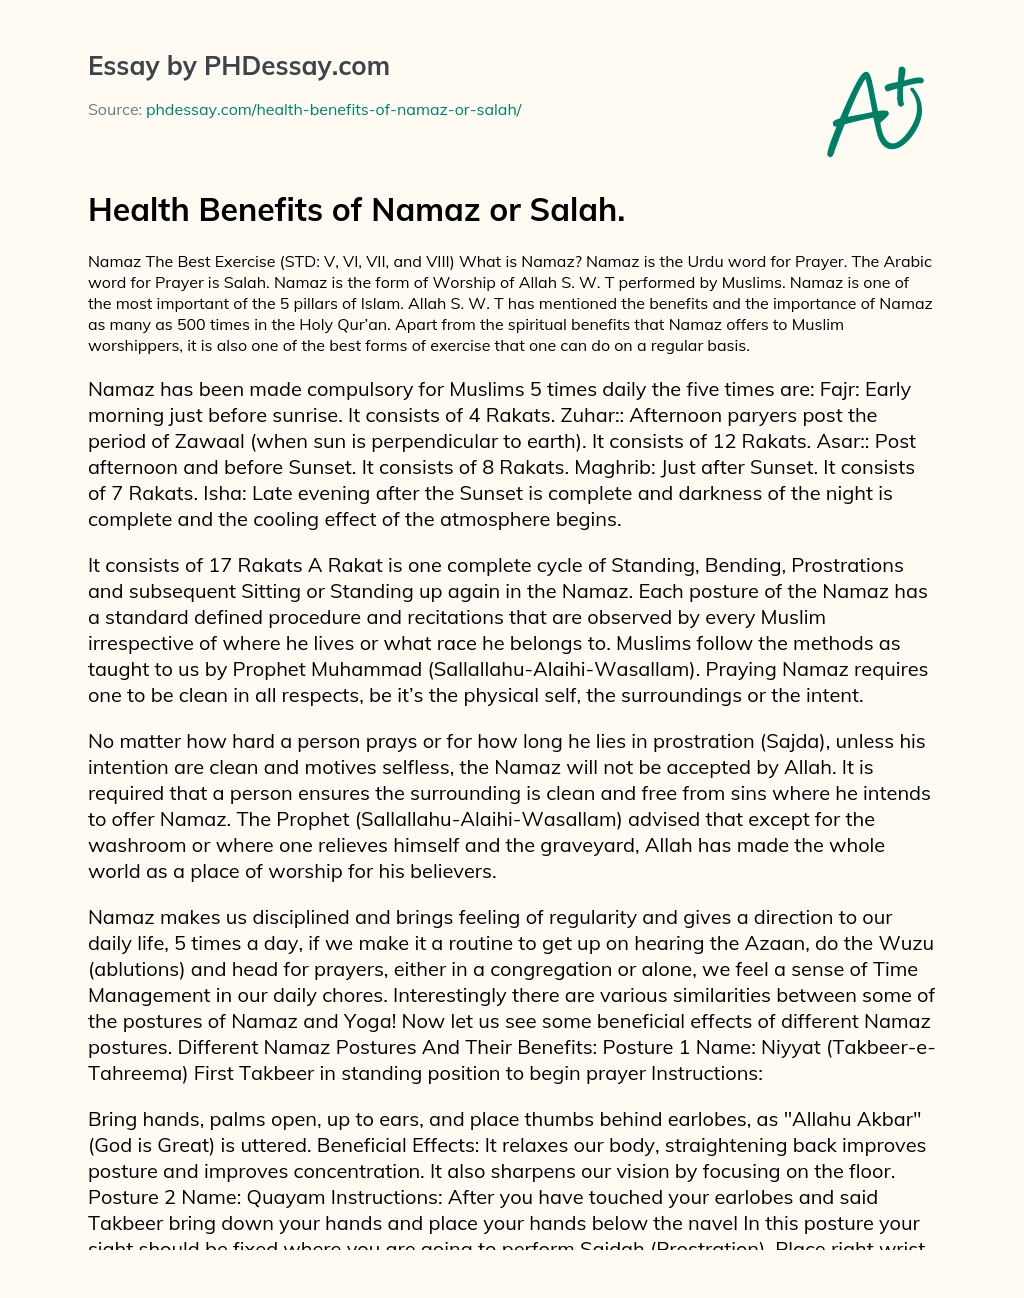 Health Benefits of Namaz or Salah. essay